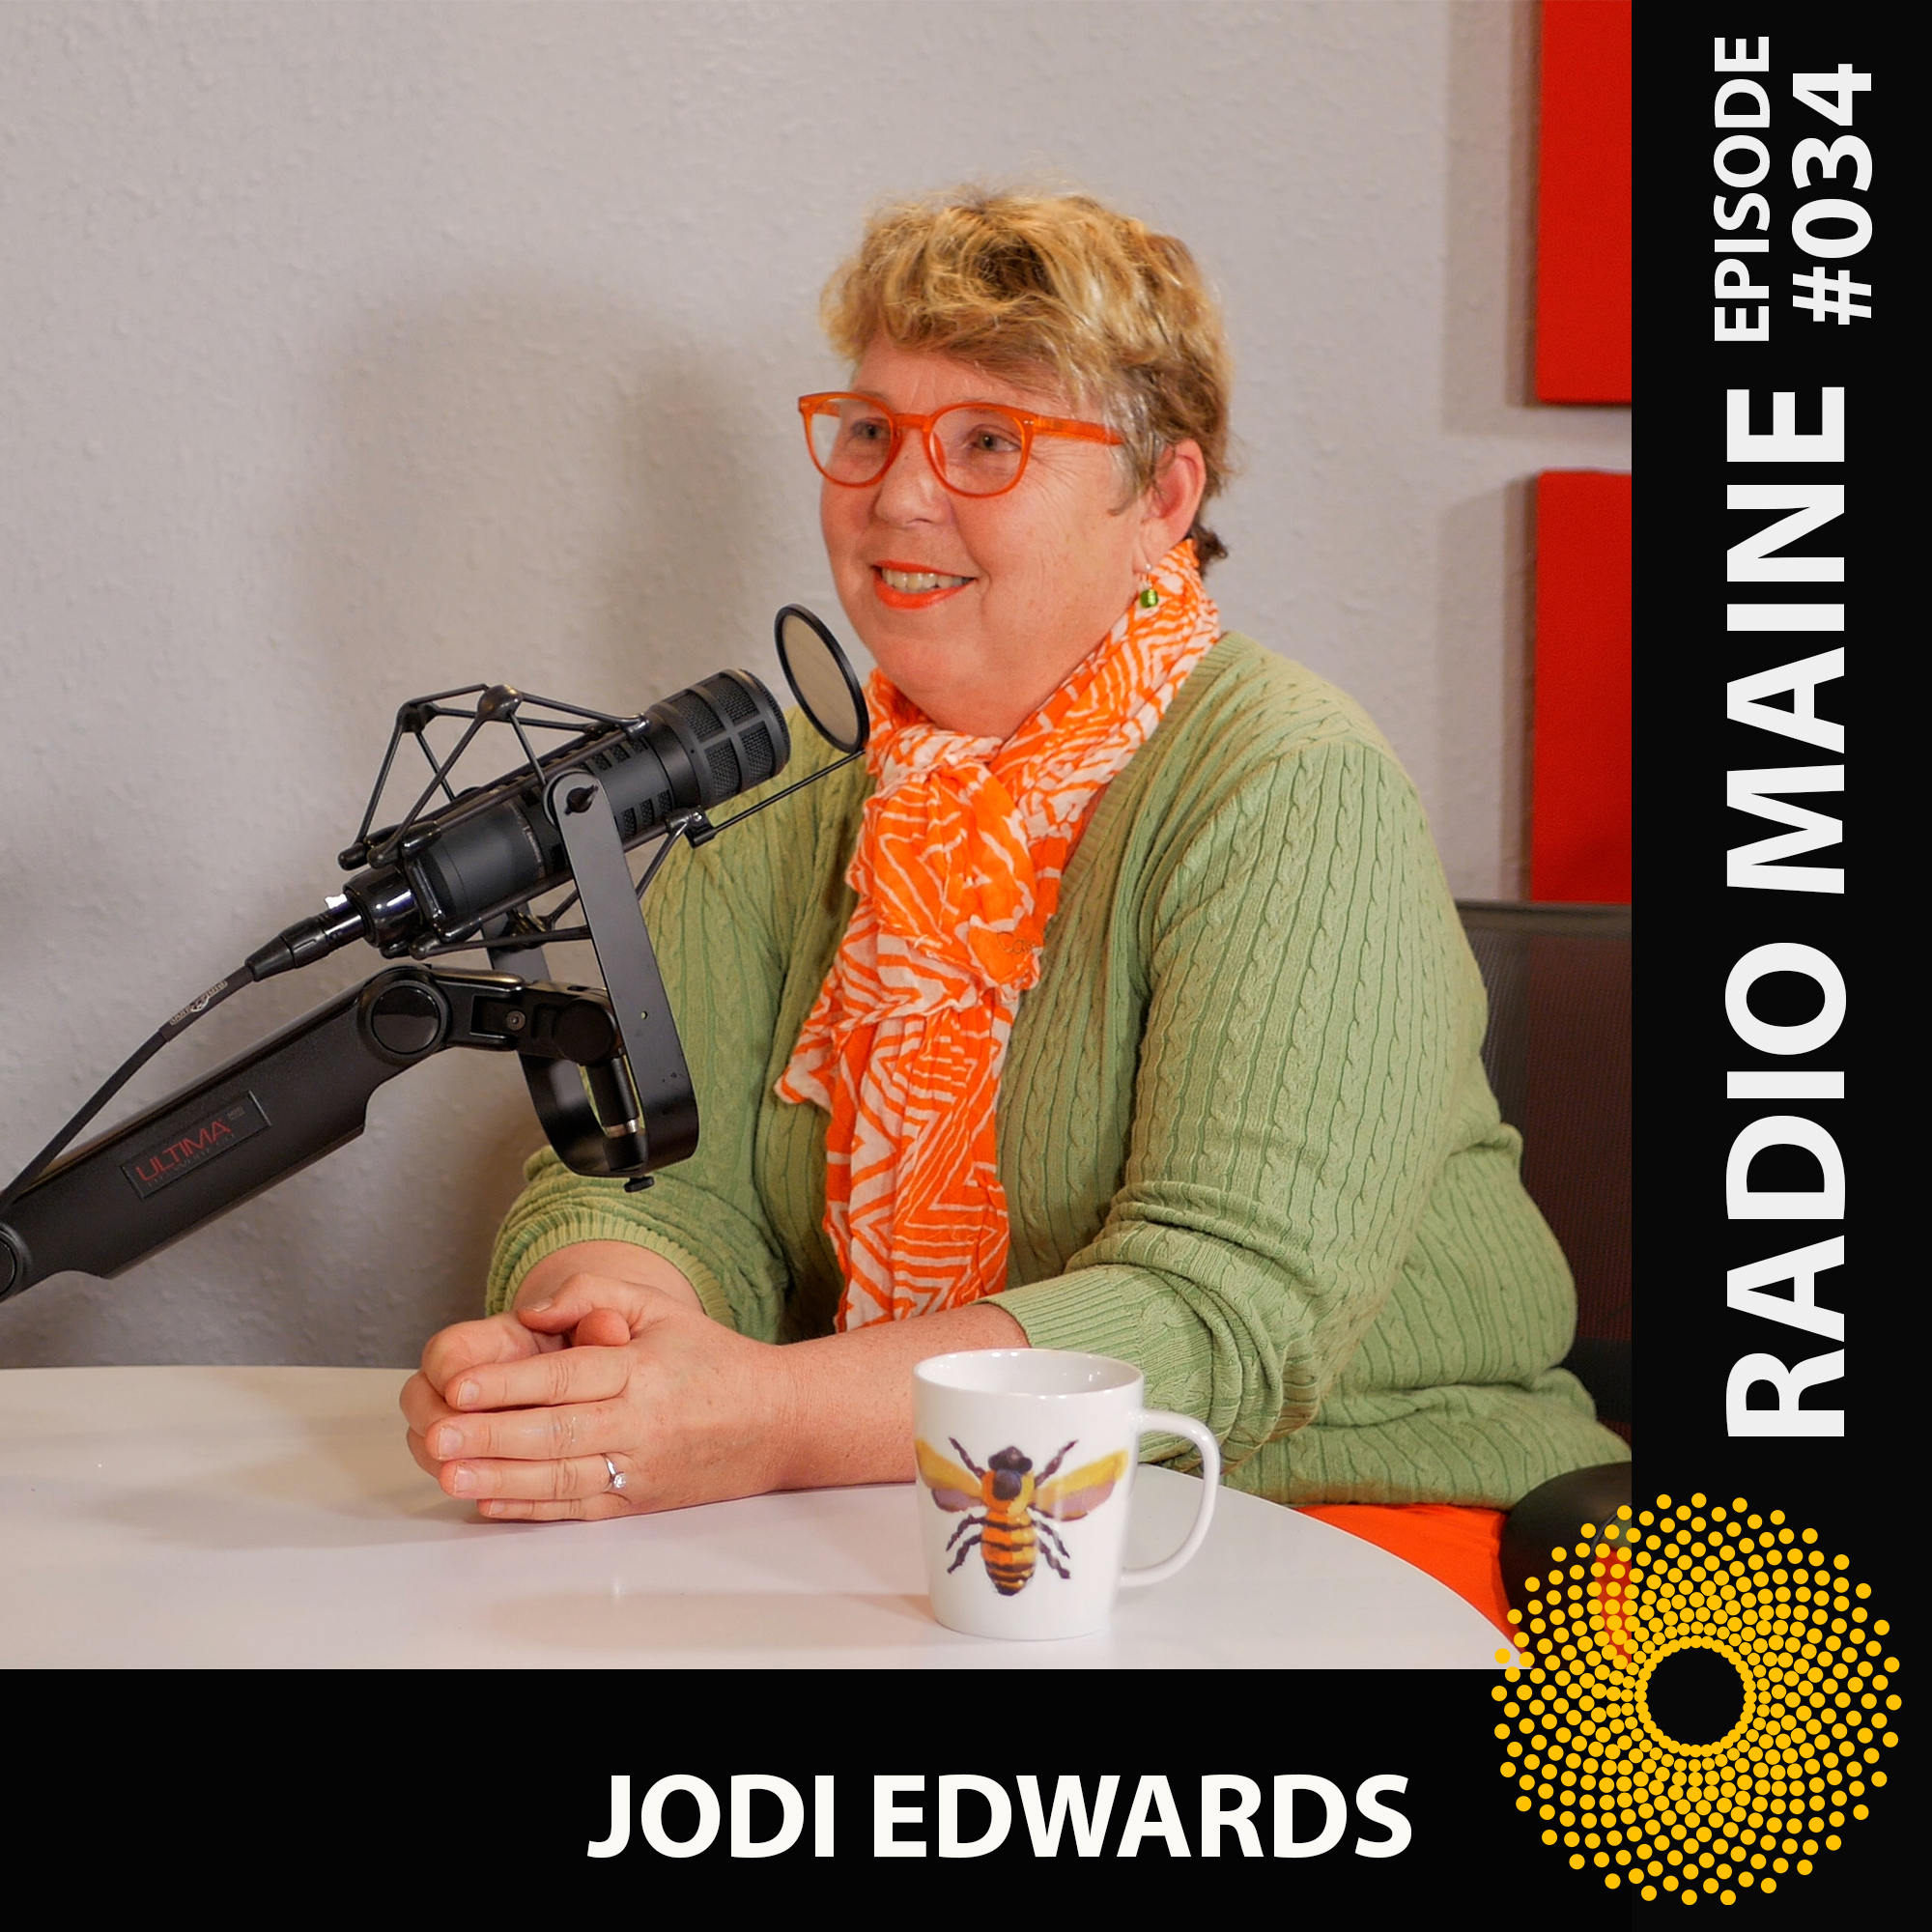 Maine artist Jodi Edwards being interviewed on Radio Maine with Dr. Lisa Belisle